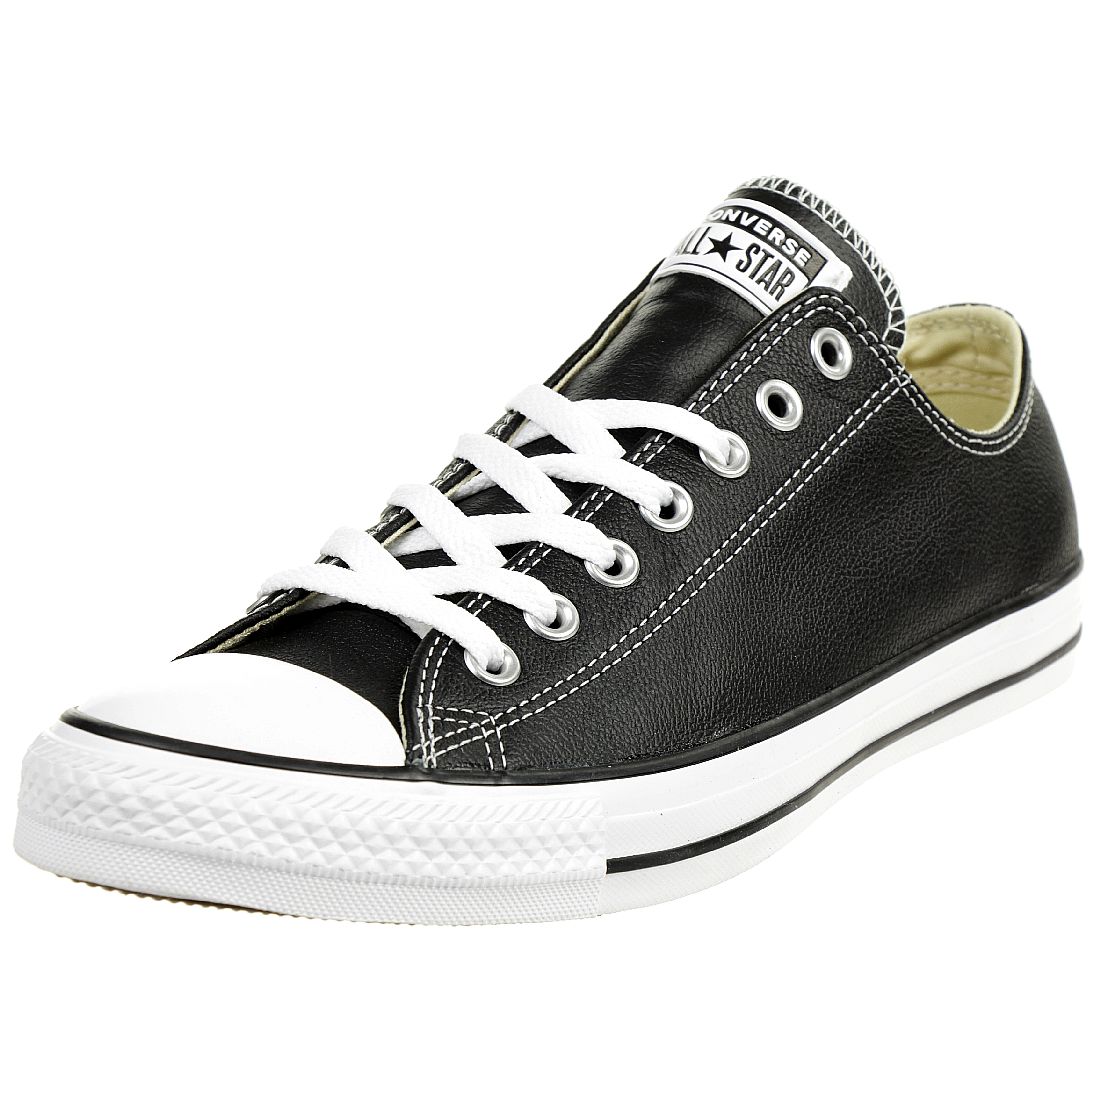 Converse C Taylor All Star OX Chuck Schuhe Sneaker Leder black 132174C